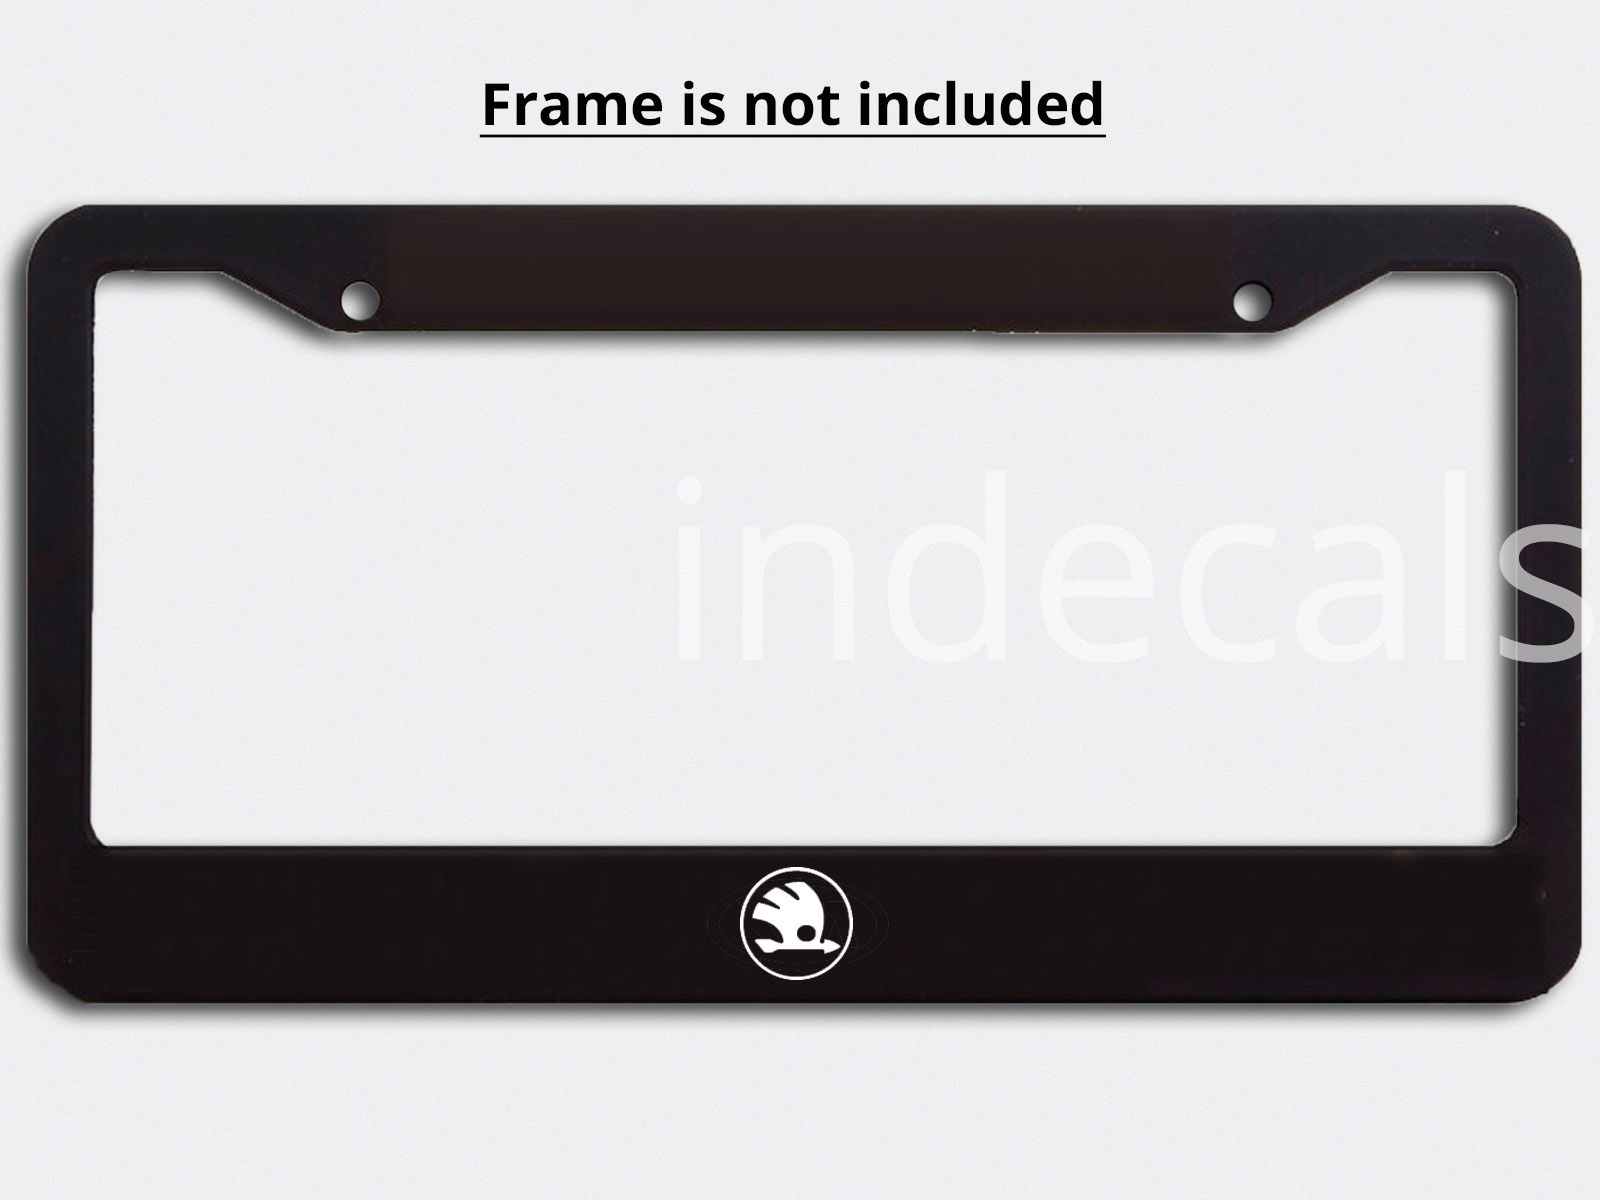 3 x Skoda Stickers for License Plate Frame - White